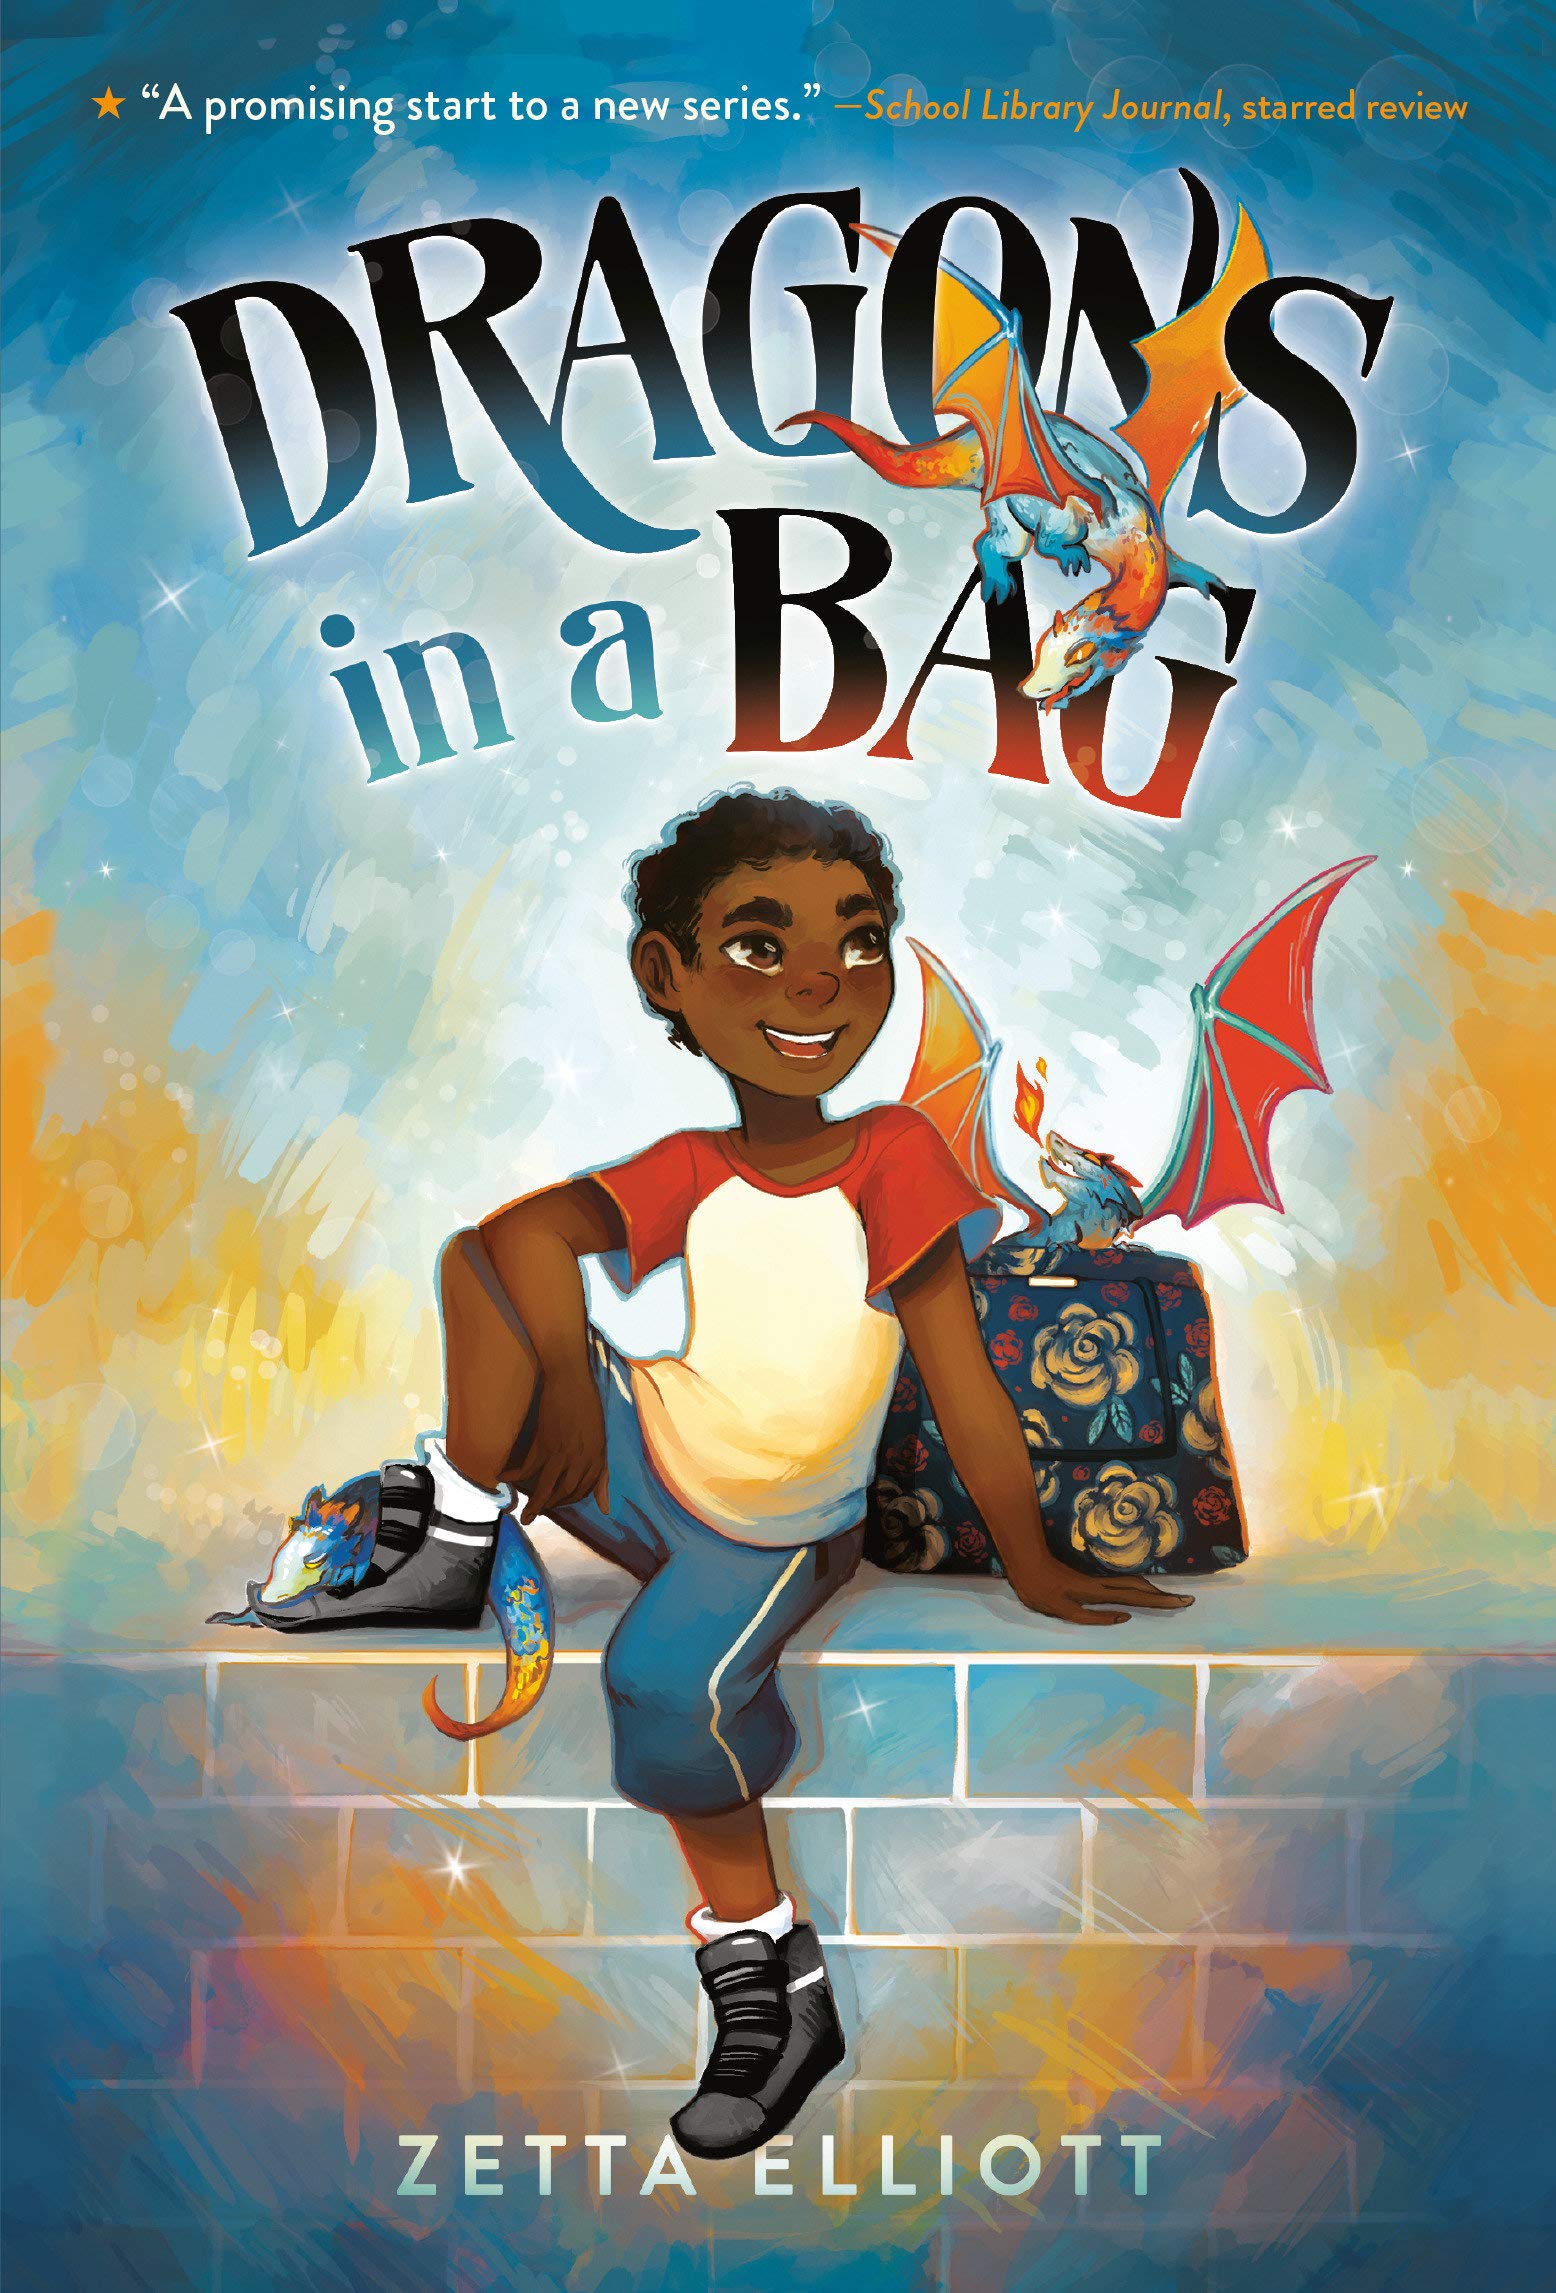 Dragons in a Bag series by Zetta Elliot